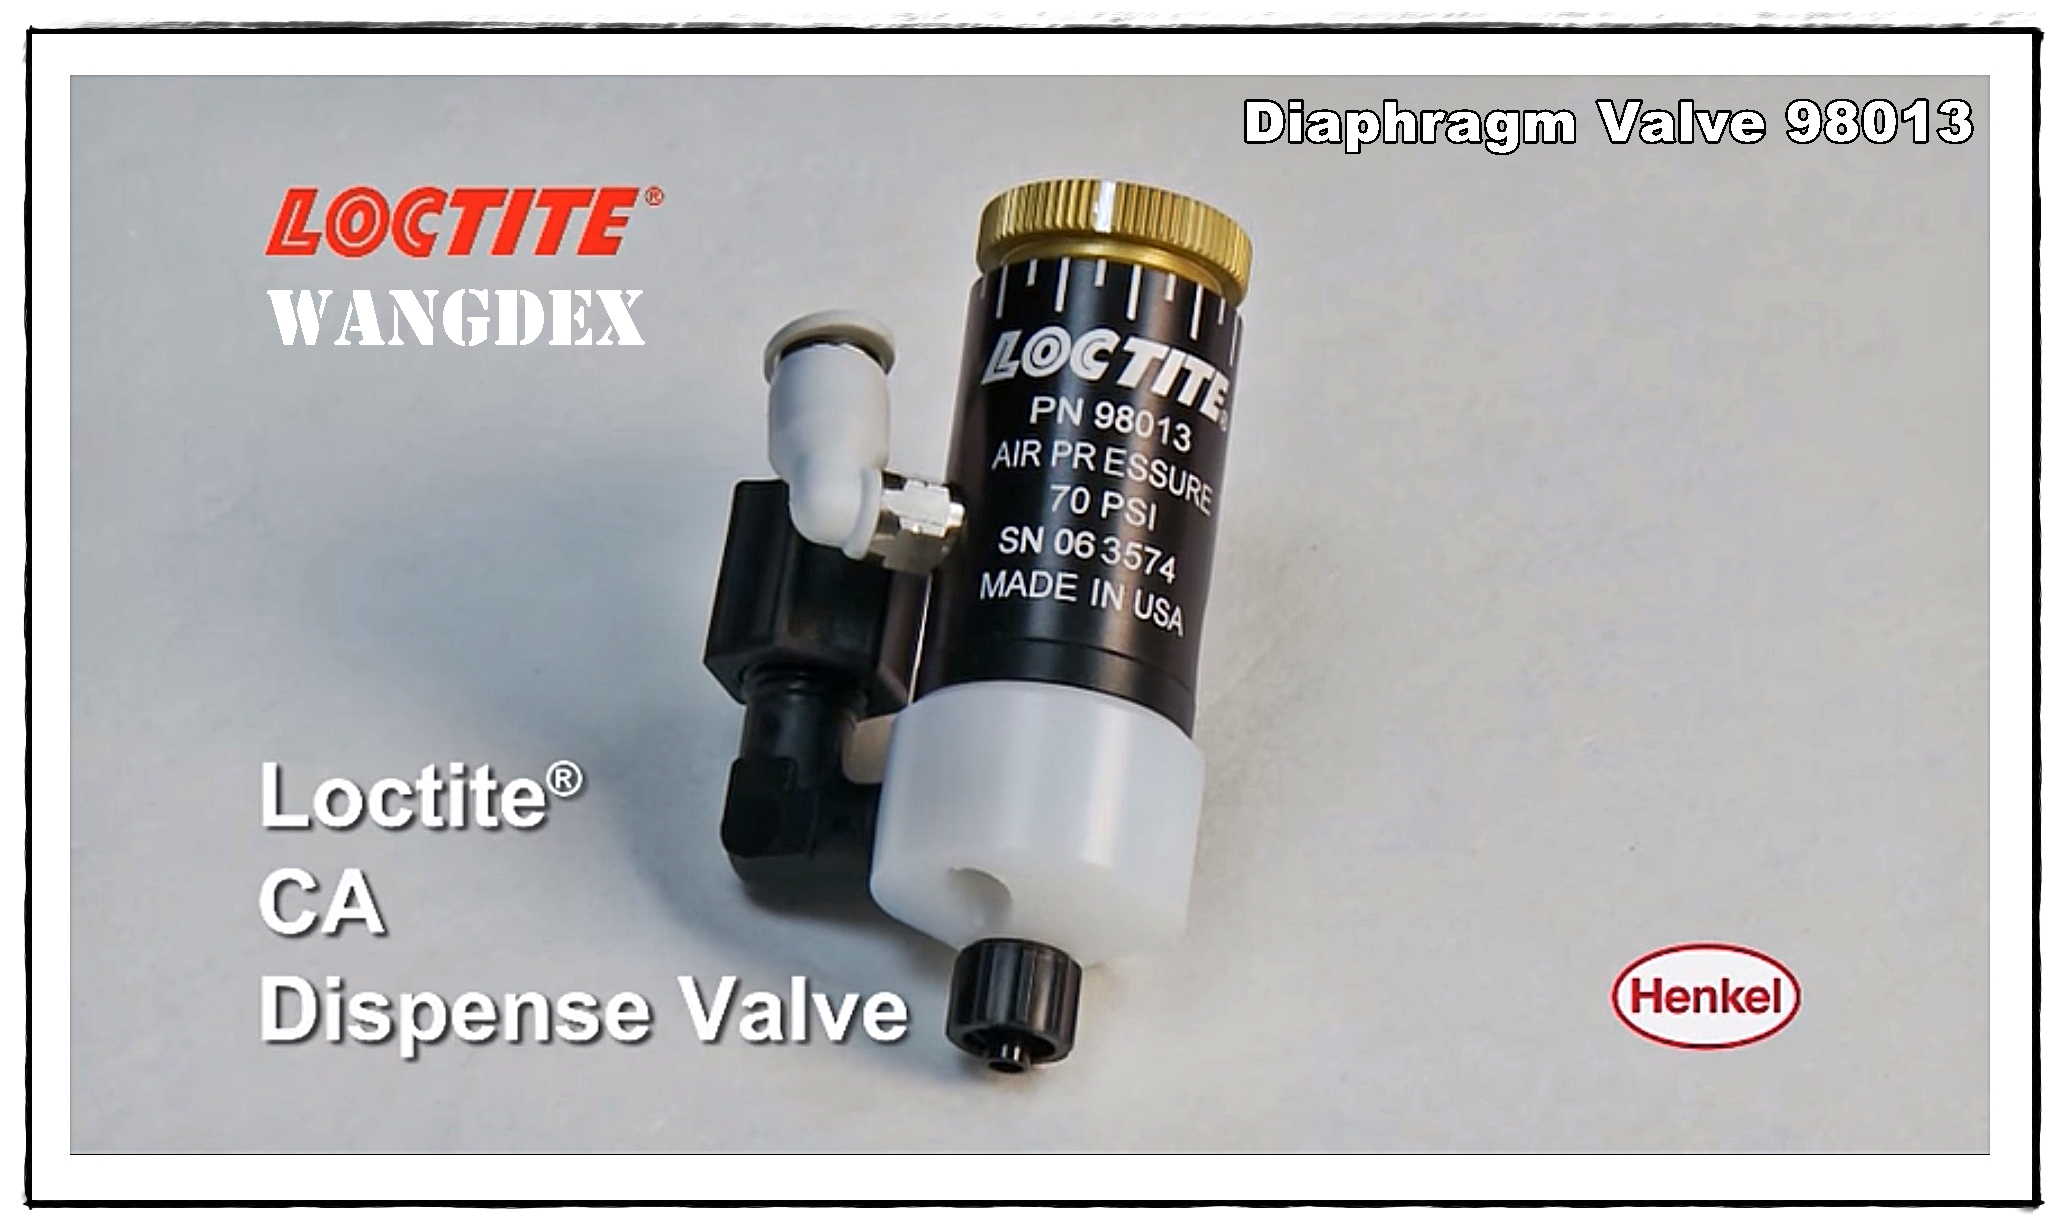 Loctite 98013 (Light Cure Dispense Valve) IDH 318654